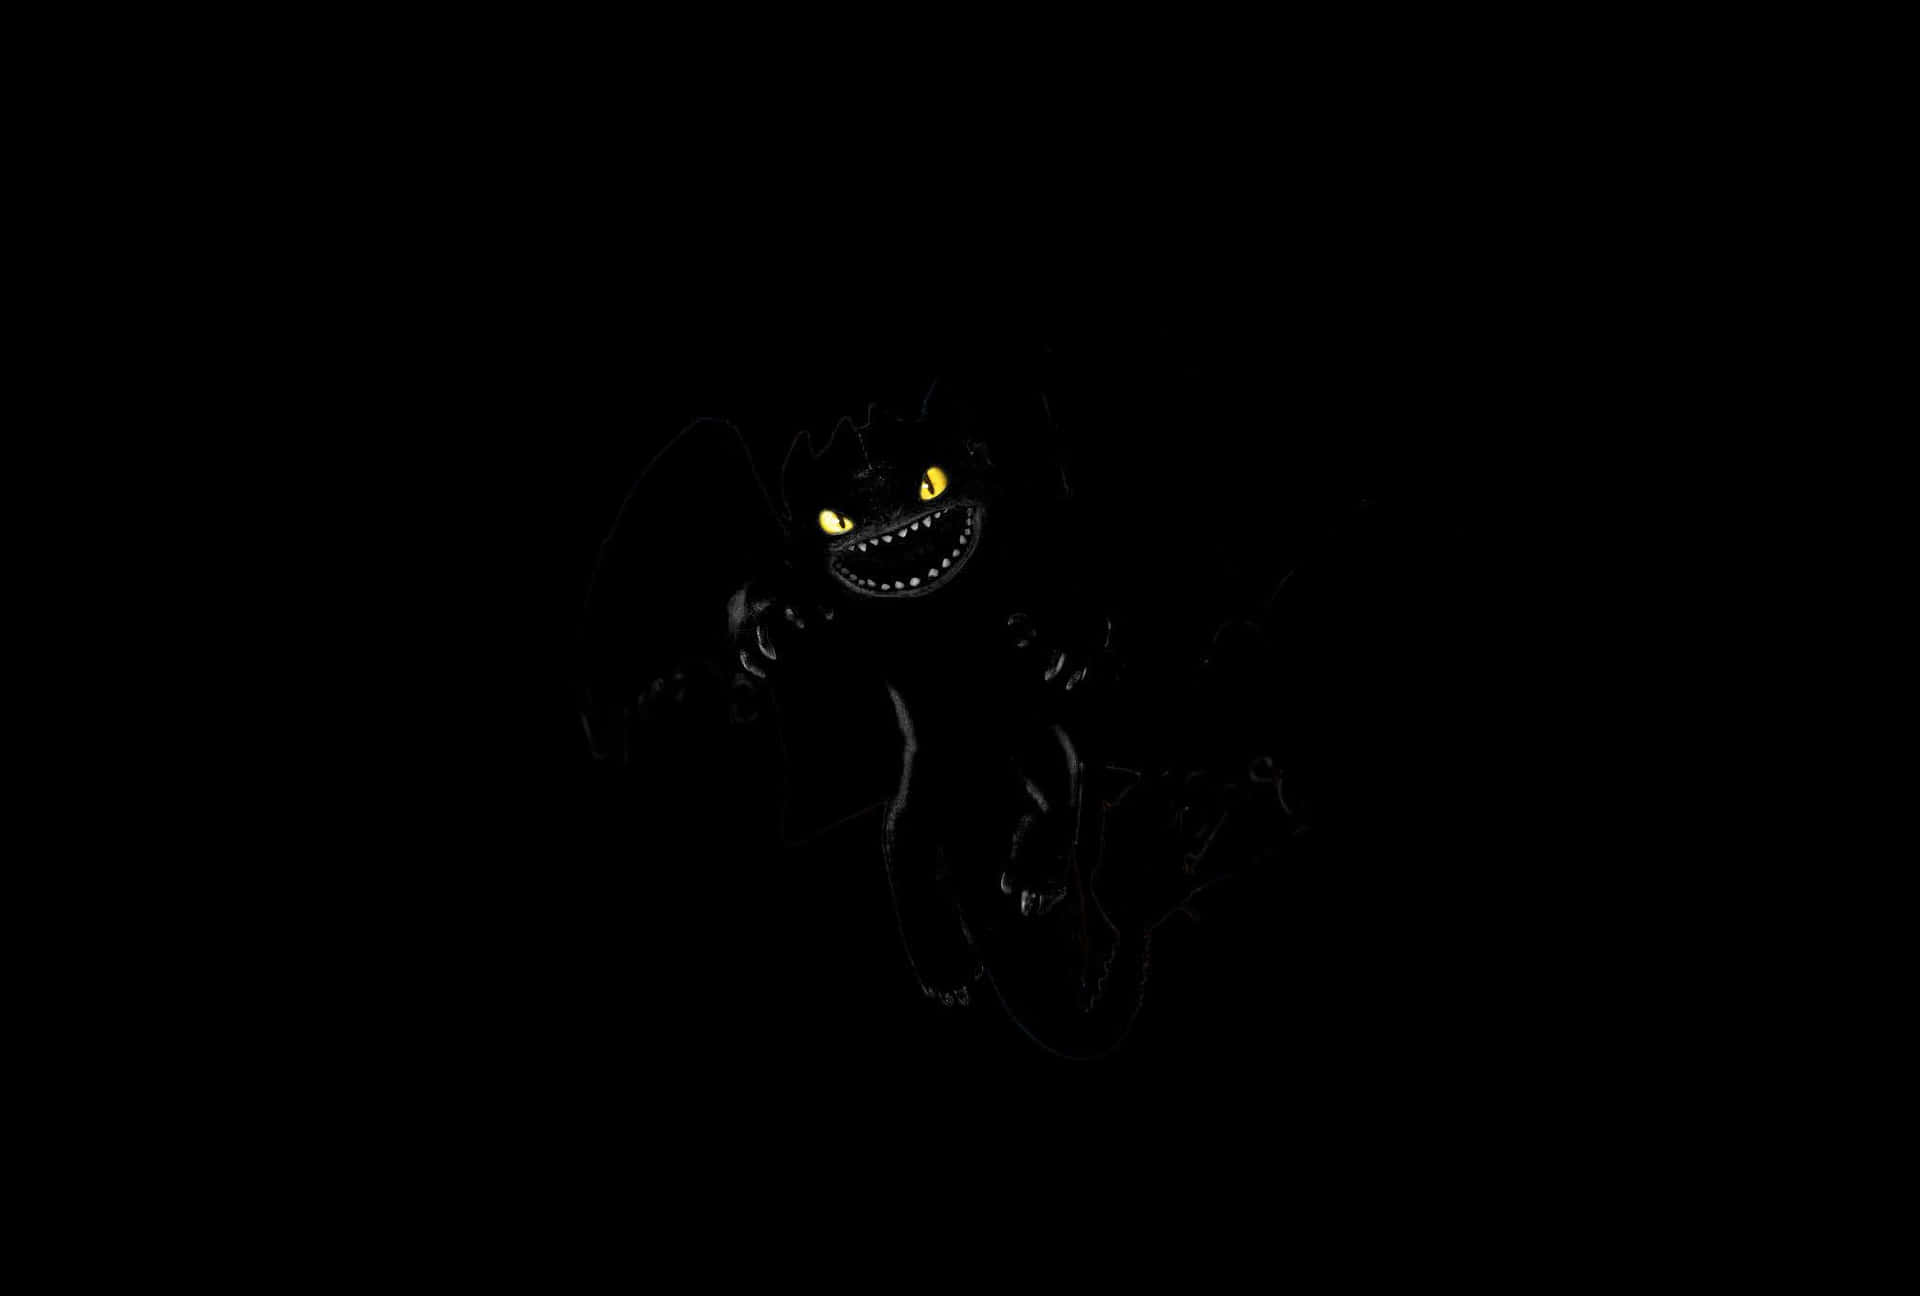 A demonic figure looming in the night